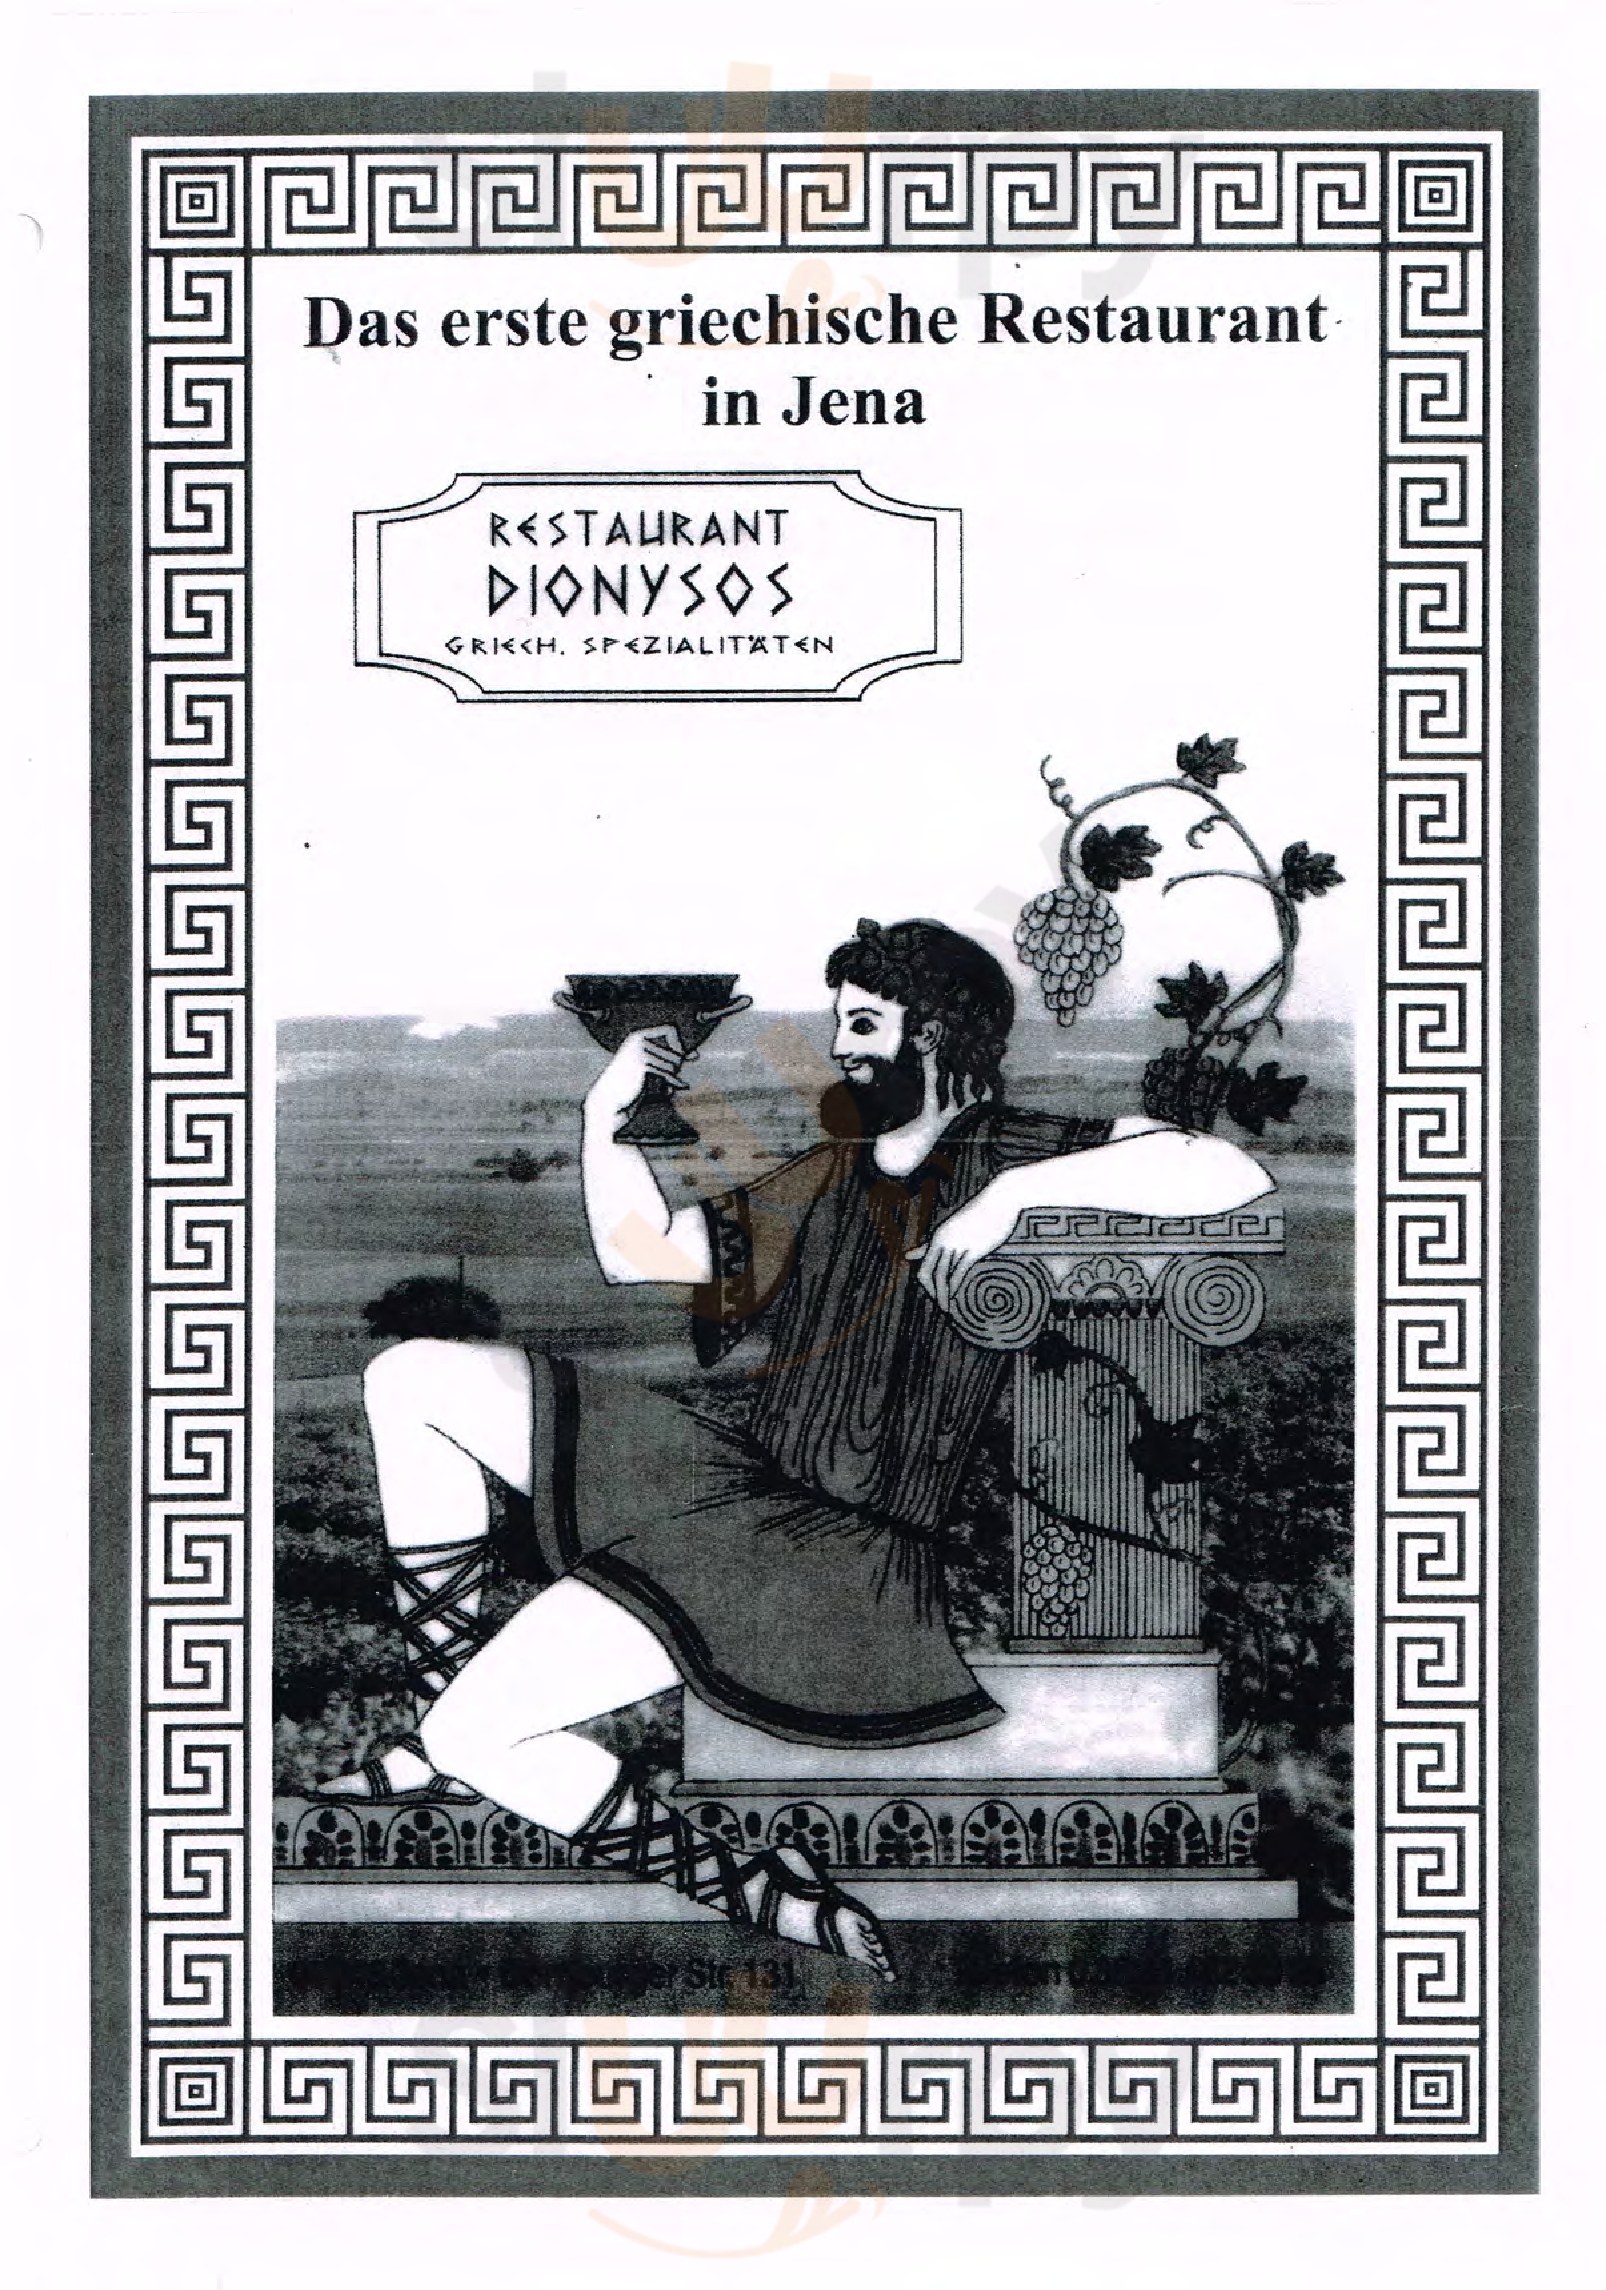 Dionysos Jena Menu - 1